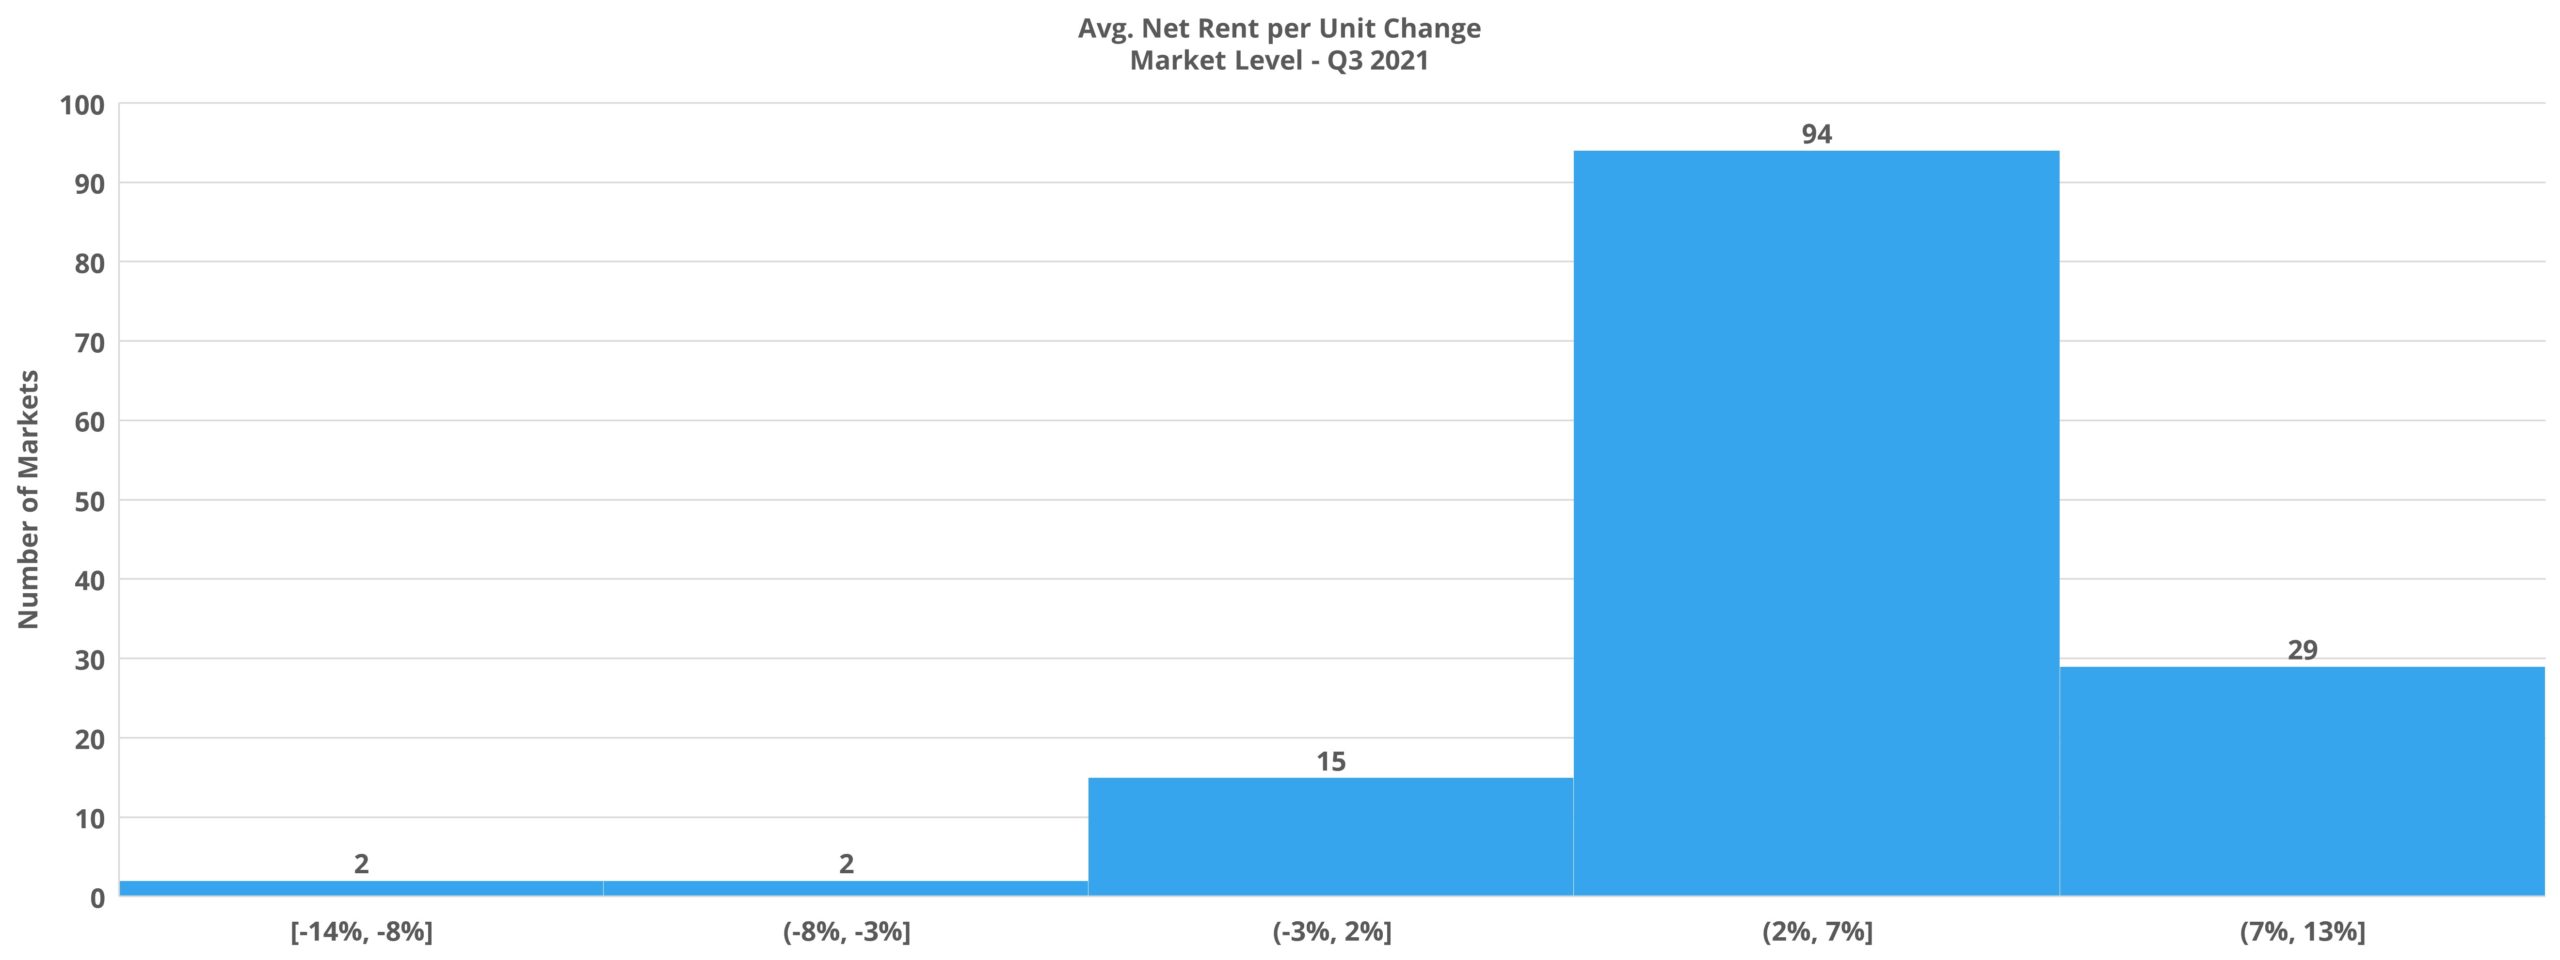 Avg. Net Rent per Unit Change